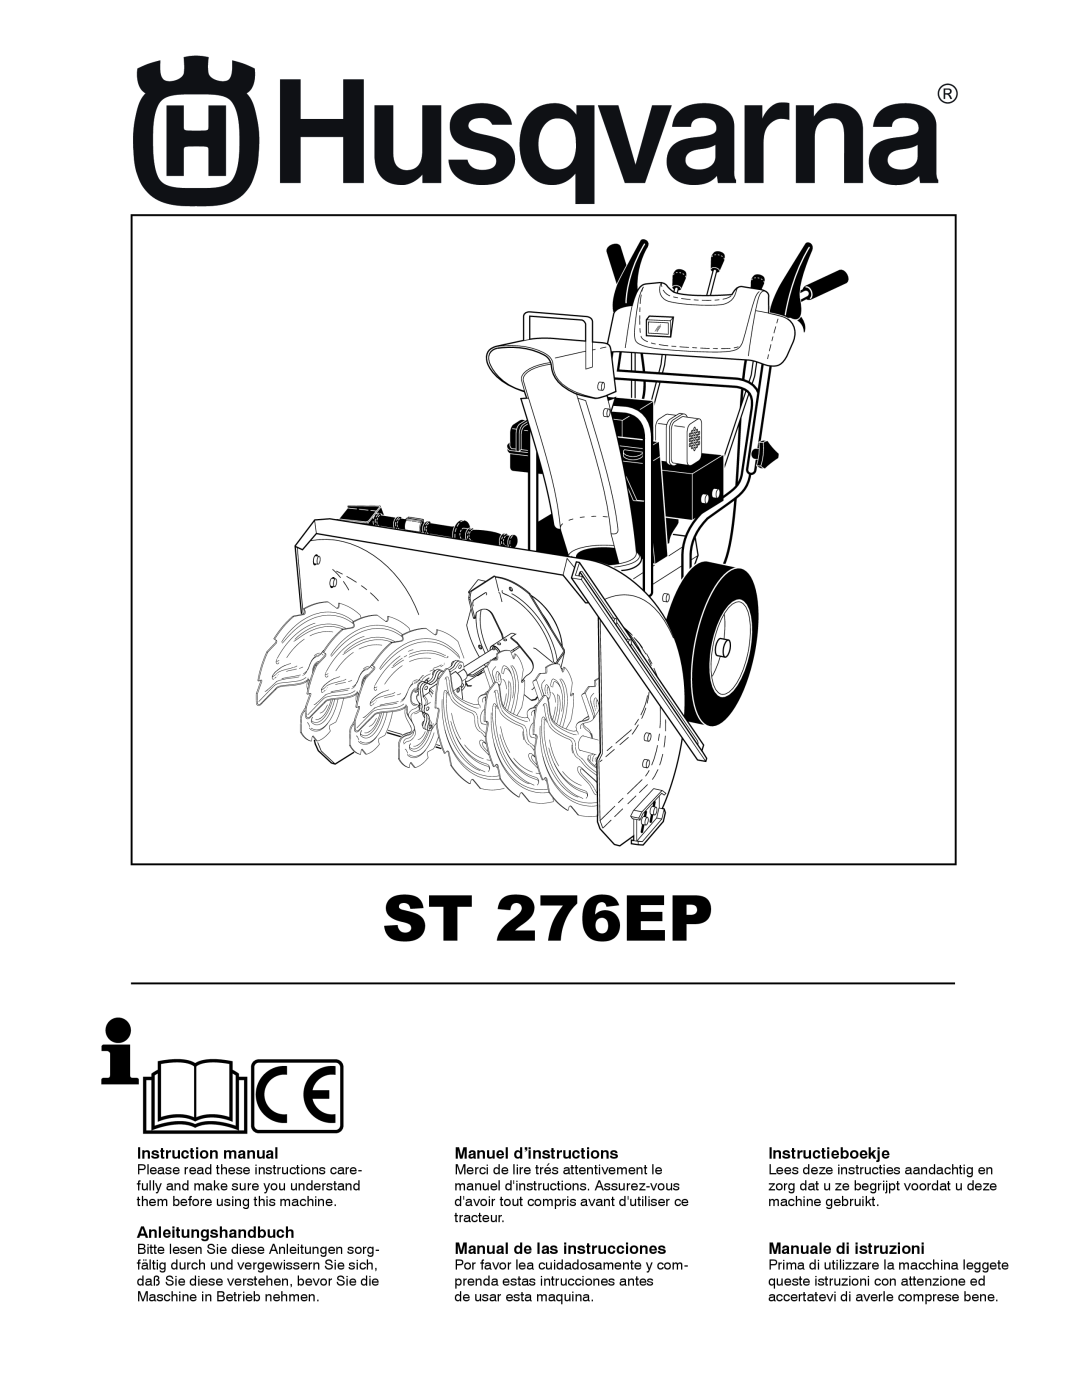 Husqvarna ST 276EP instruction manual Instruction manual, Anleitungshandbuch, Manuel d’instructions, Instructieboekje 